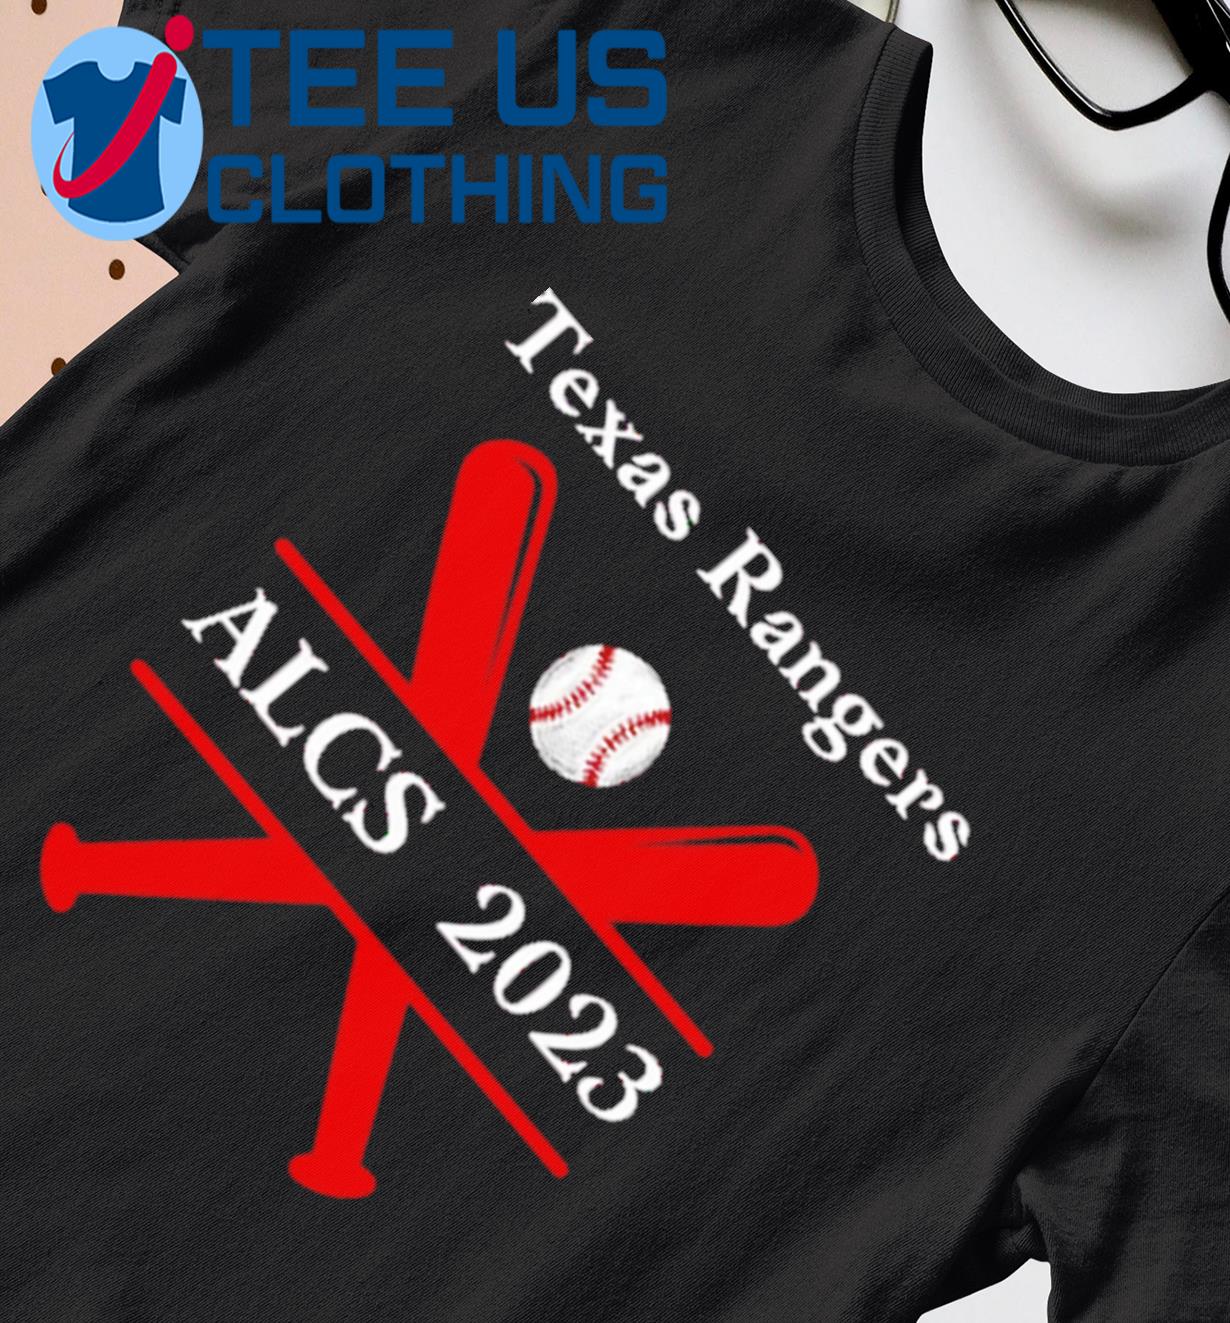 American League Division Series Winners Texas Rangers Shirt, hoodie,  sweater, long sleeve and tank top